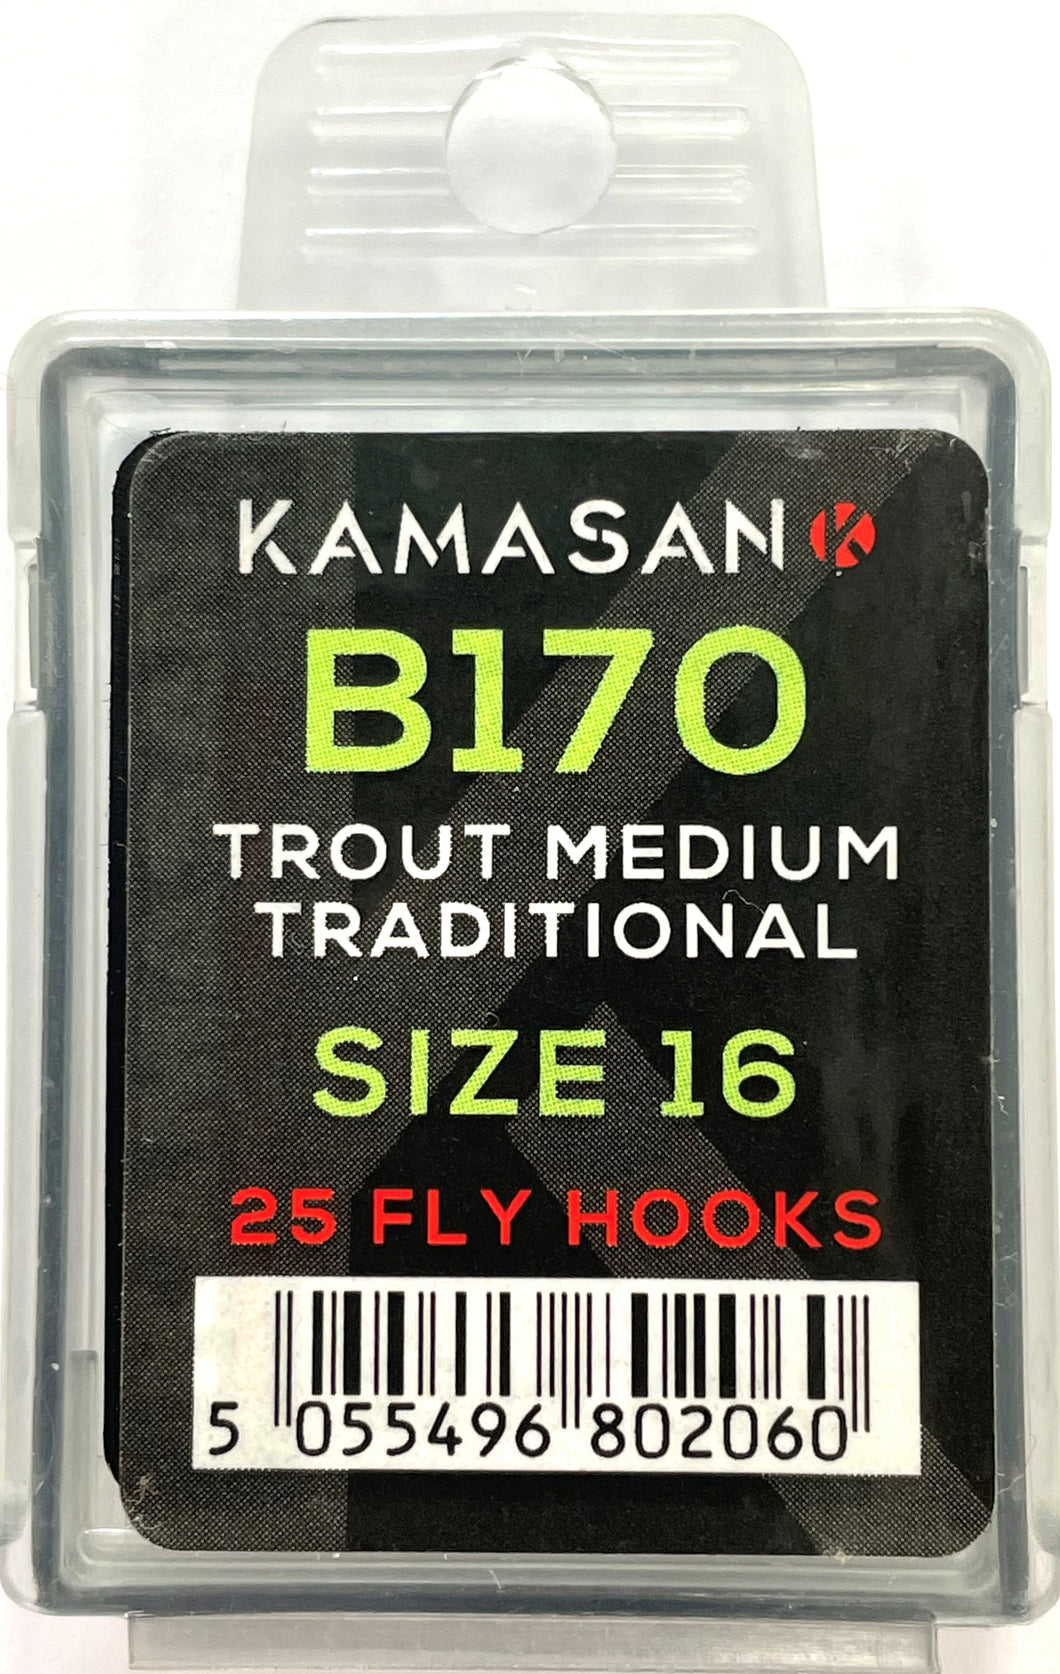 Kamasan B170 Trout Medium Traditional Fly Hooks (Size 16)